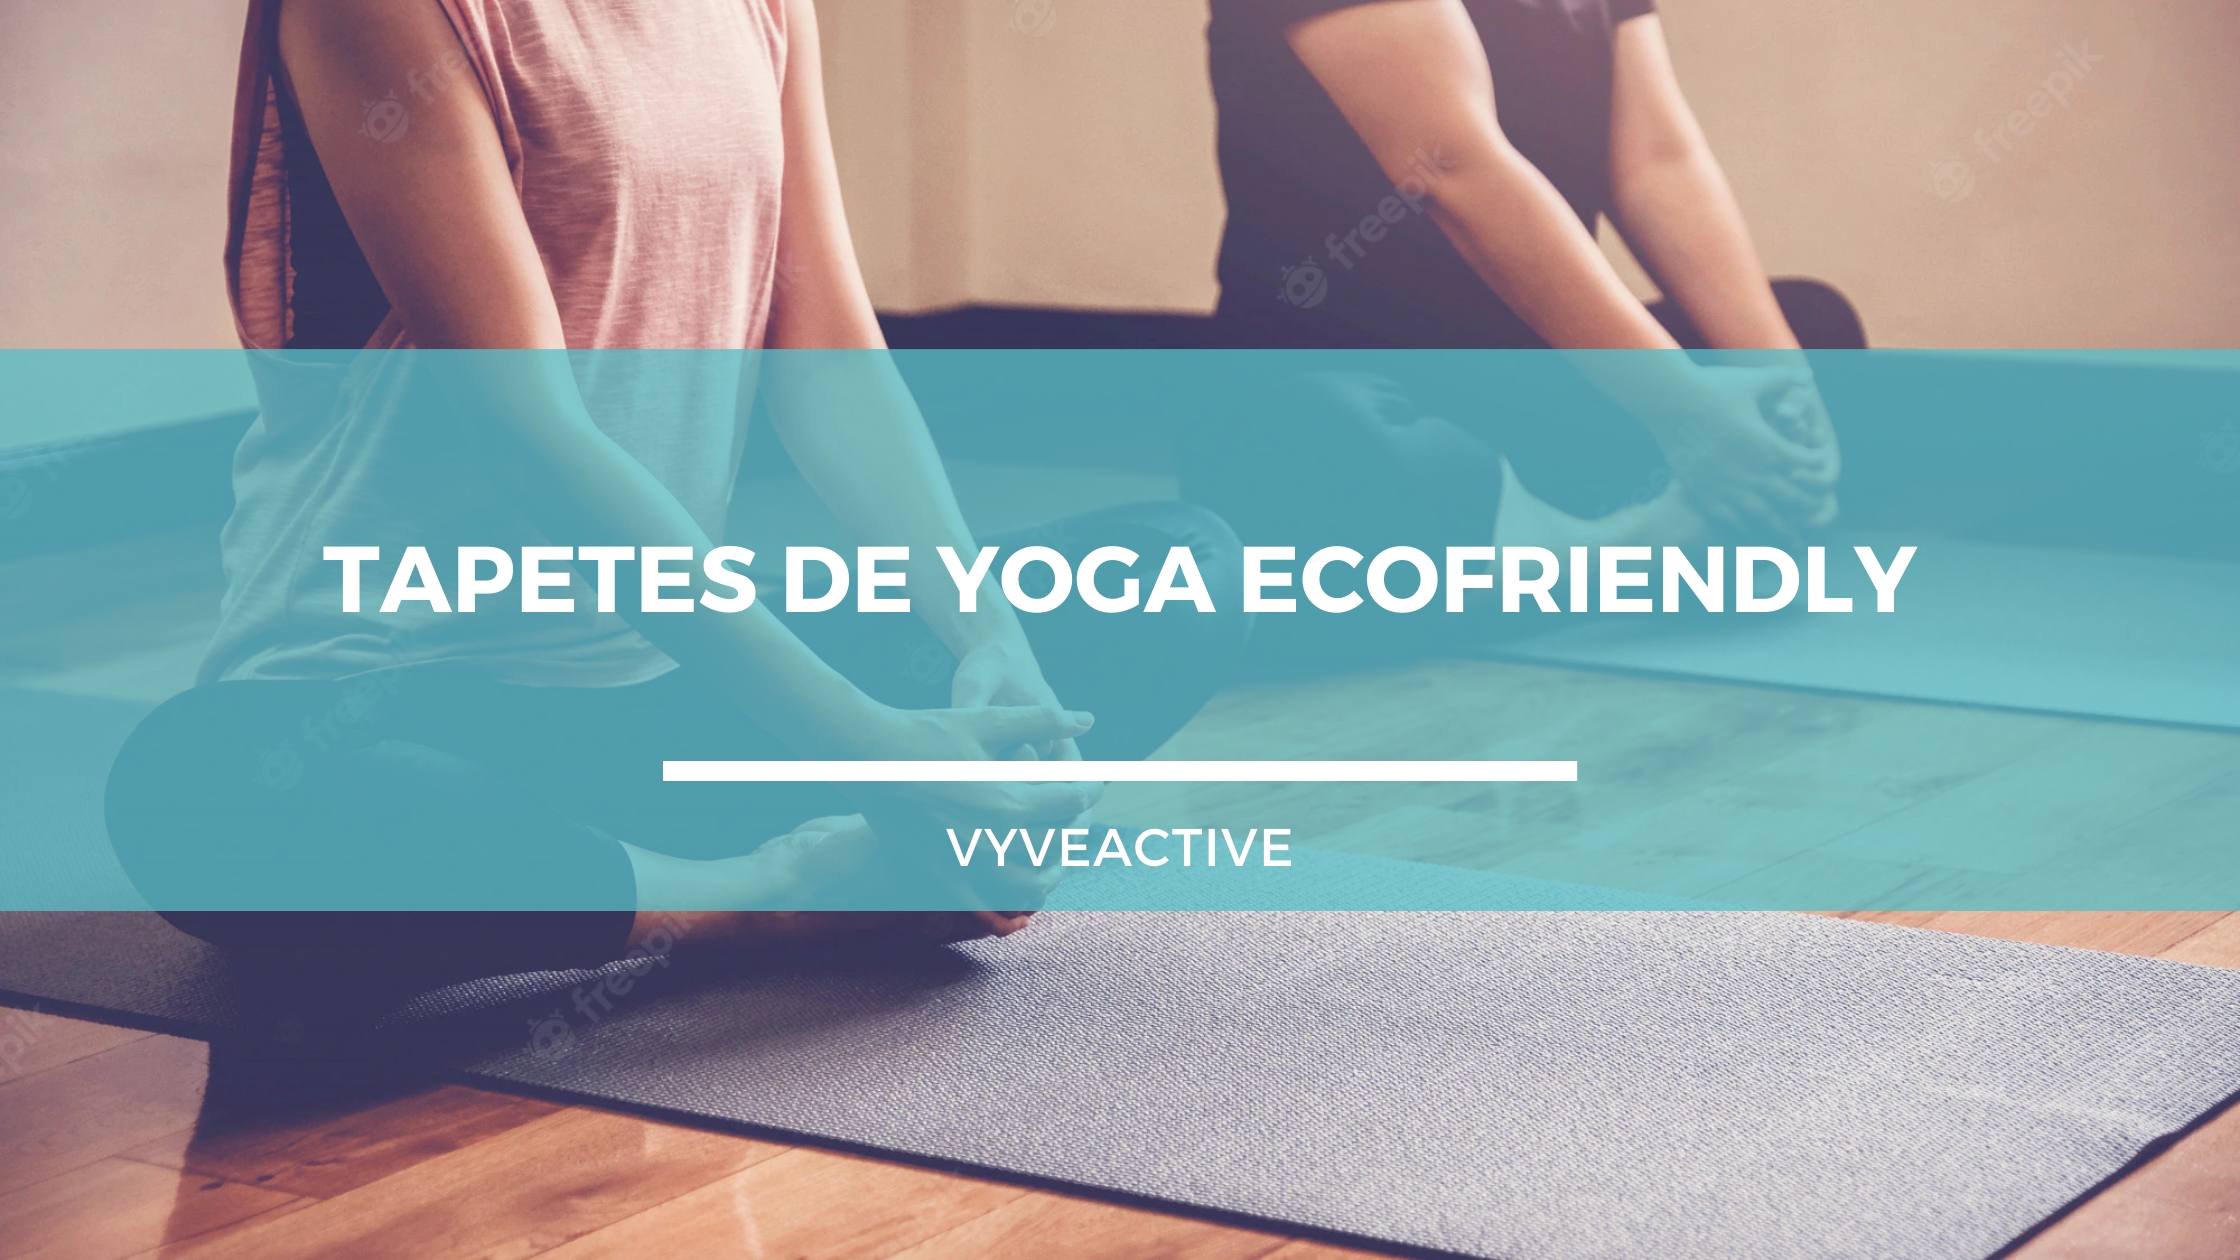 Tapetes de yoga ecofriendly